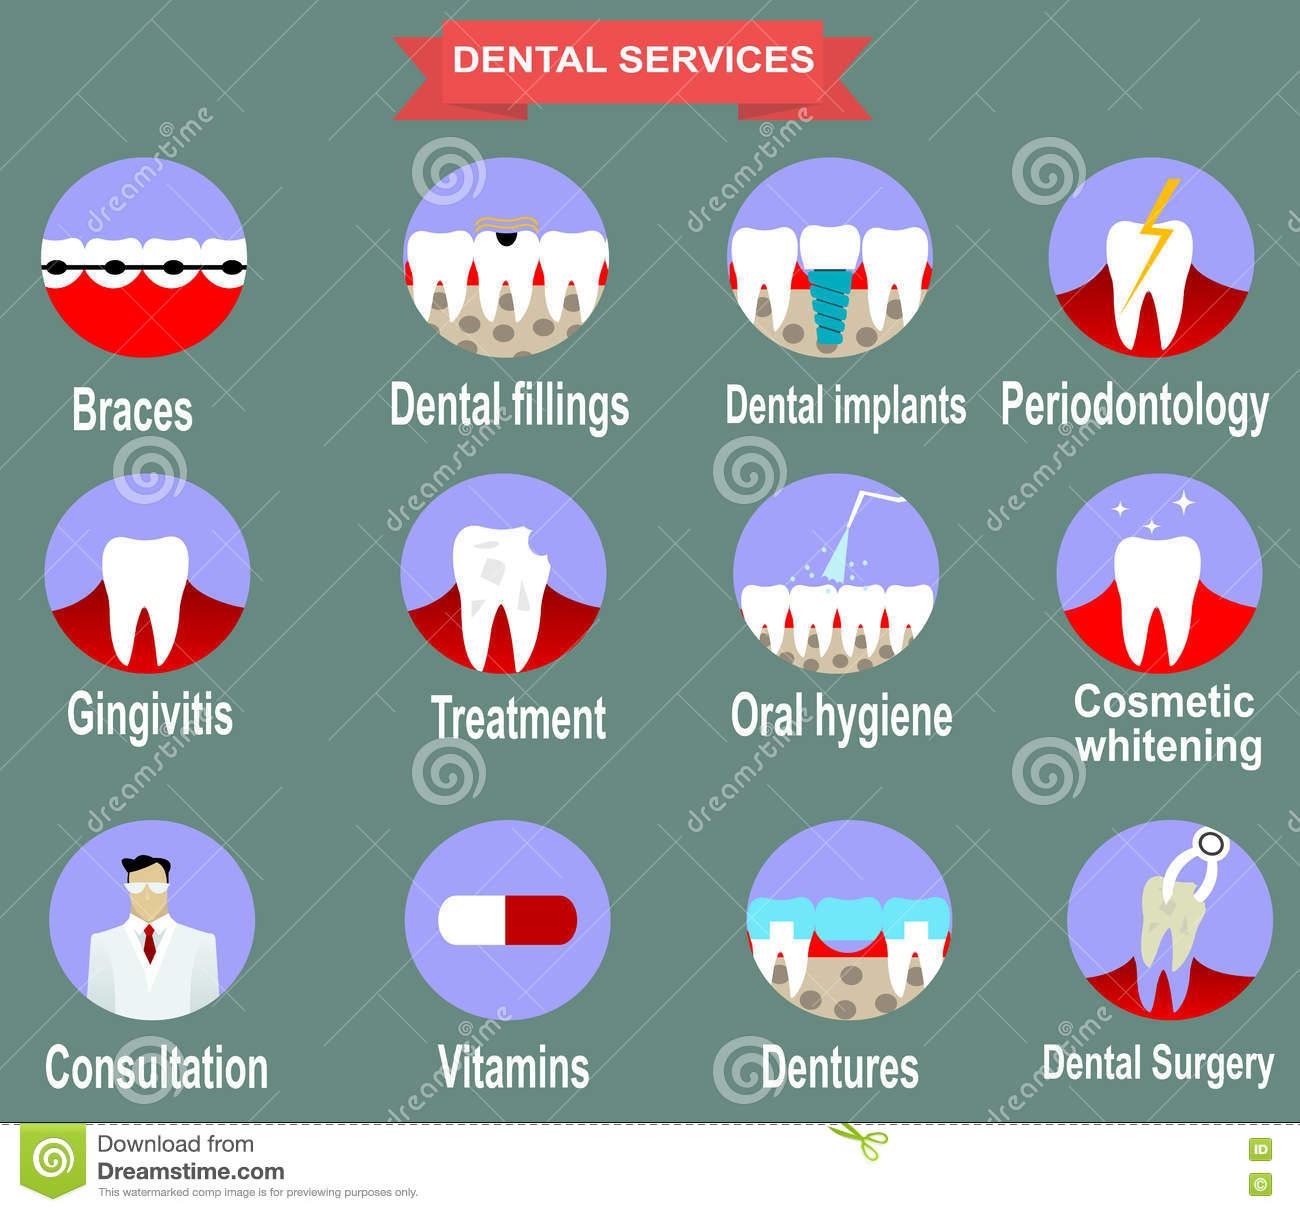 Georgia Dental Services